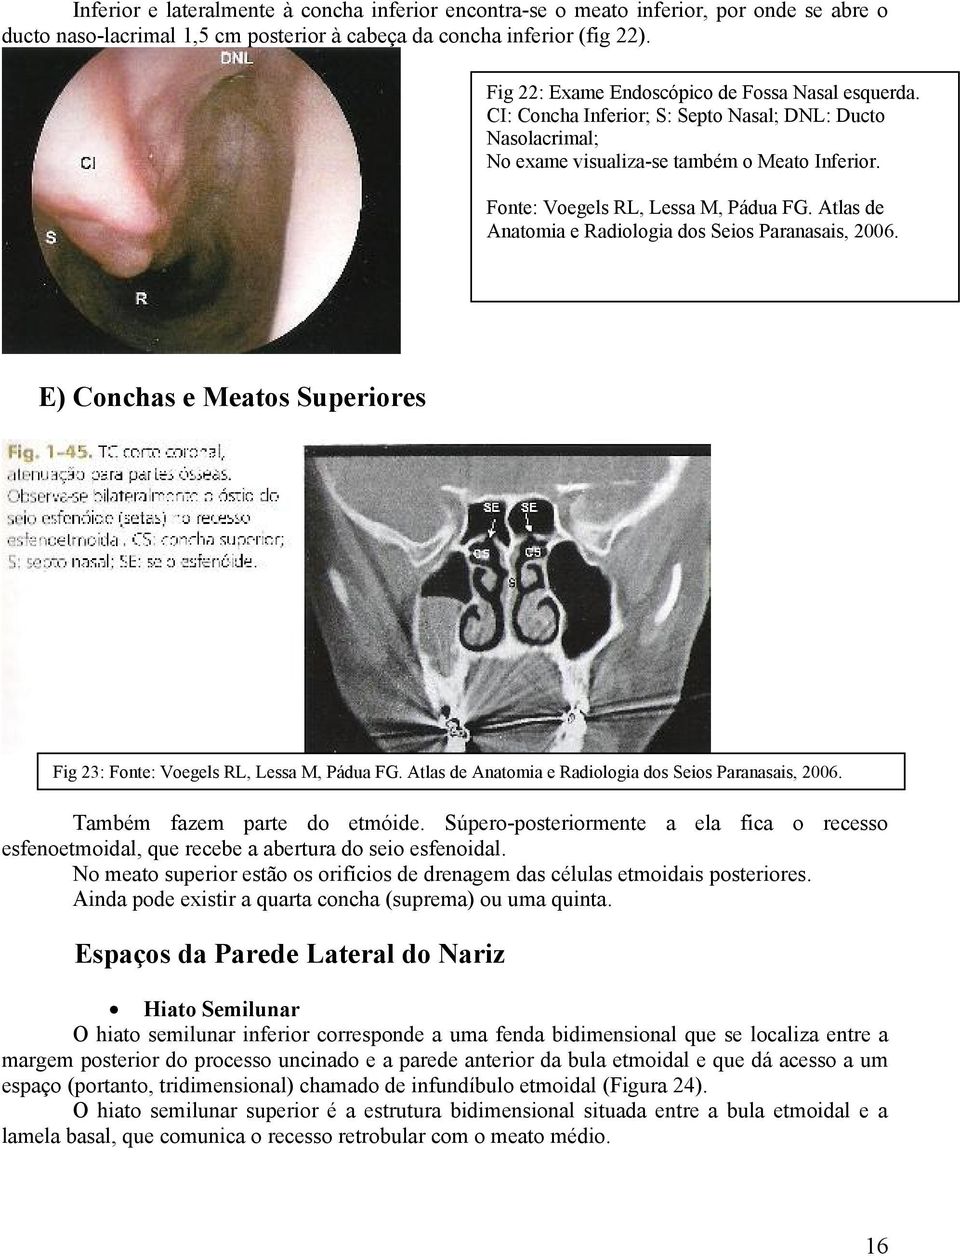 Atlas de Anatomia e Radiologia dos Seios Paranasais, 2006. E) Conchas e Meatos Superiores Fig 23: Fonte: Voegels RL, Lessa M, Pádua FG. Atlas de Anatomia e Radiologia dos Seios Paranasais, 2006.